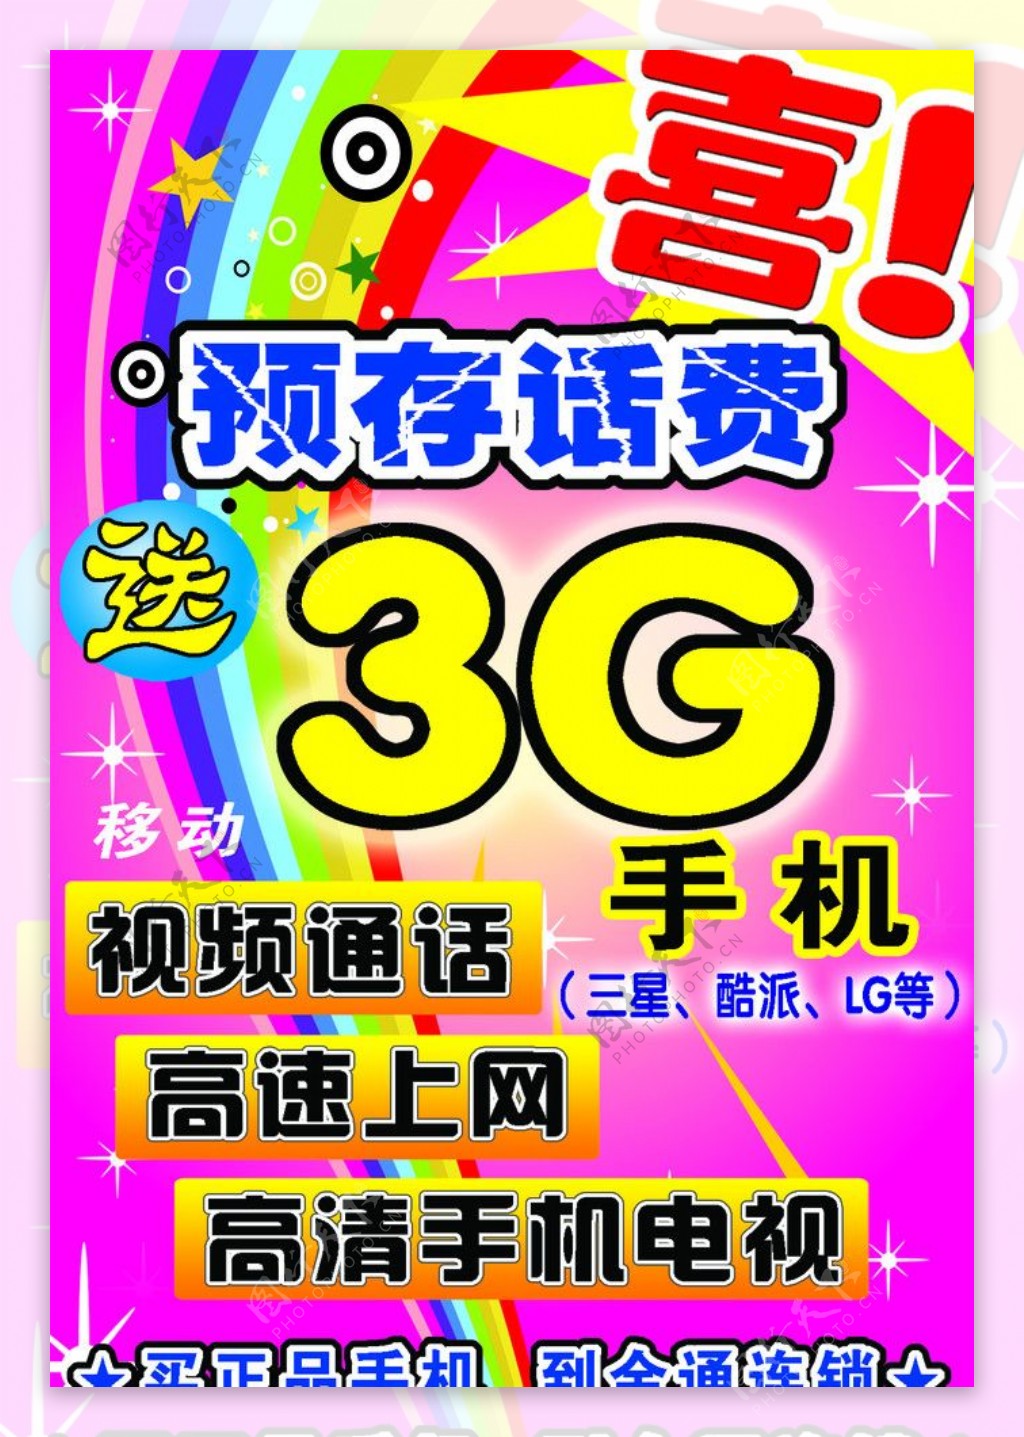 3G活动海报图片